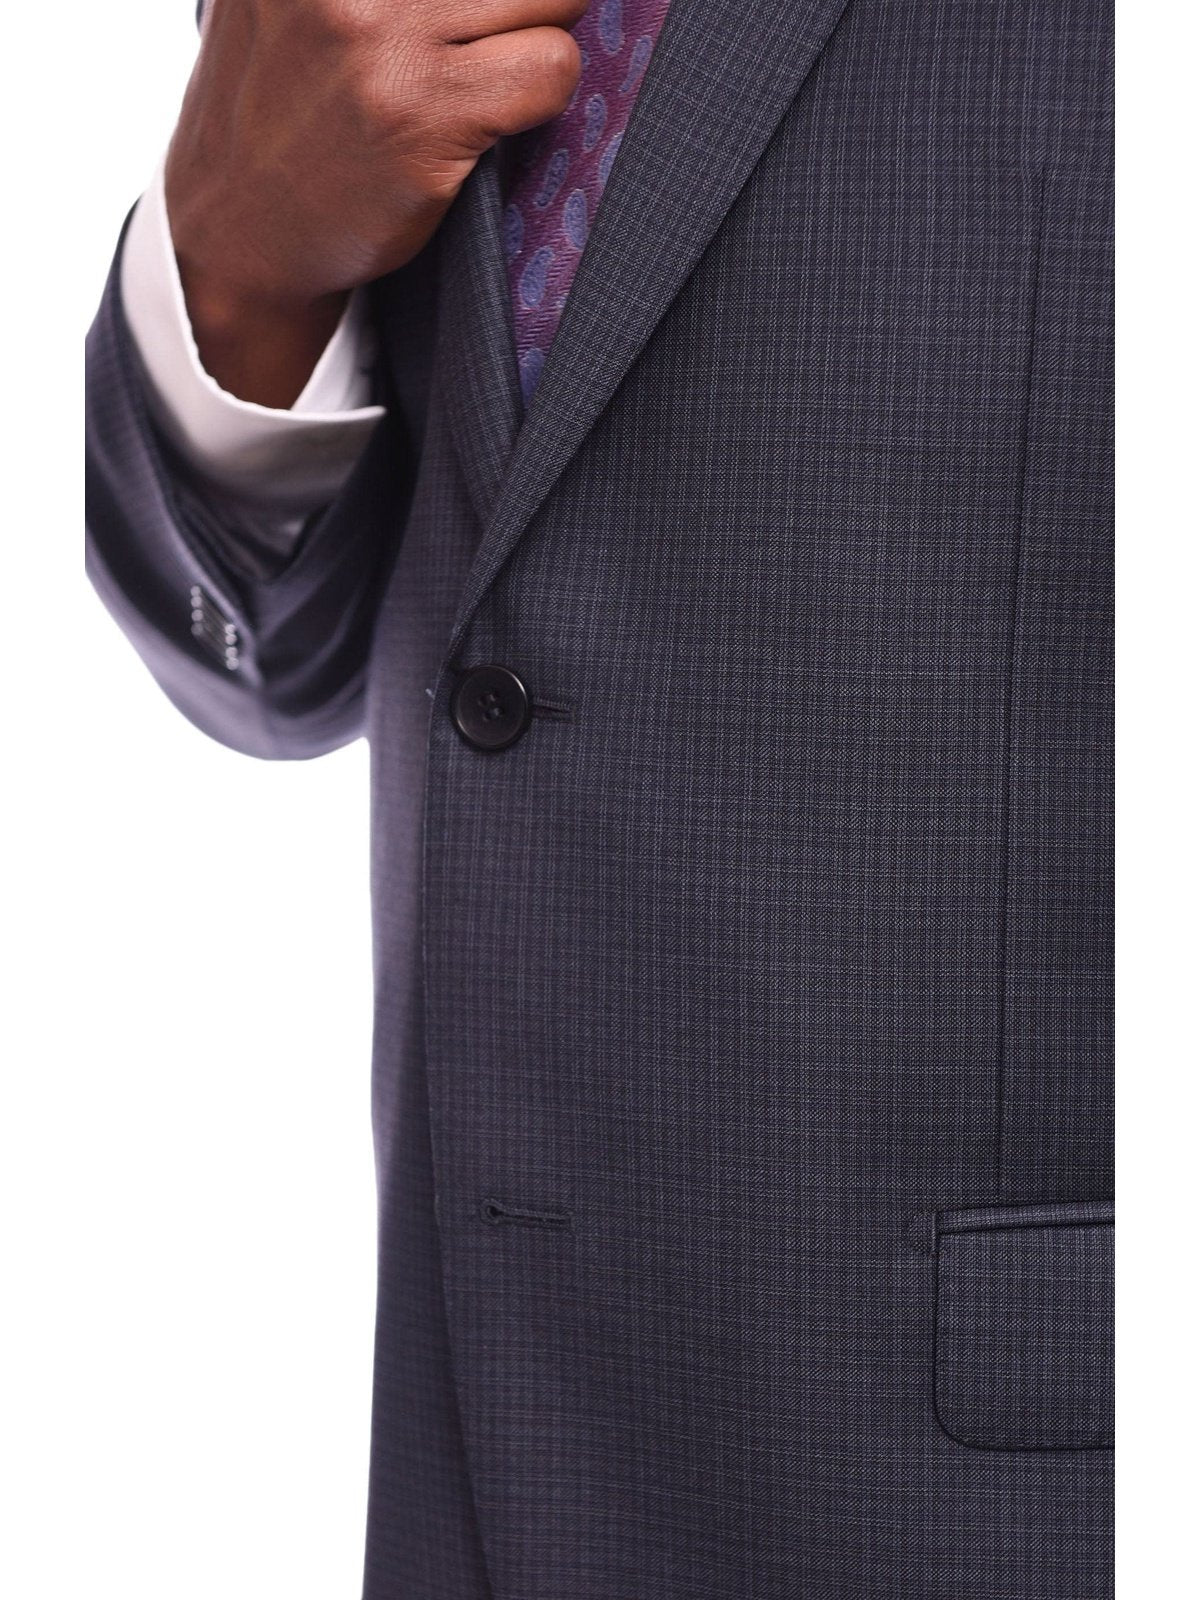 Napoli Sale Suits Men&#39;s Napoli Classic Fit Blue Plaid 2 Button 100% Italian Loro Piana Wool Suit